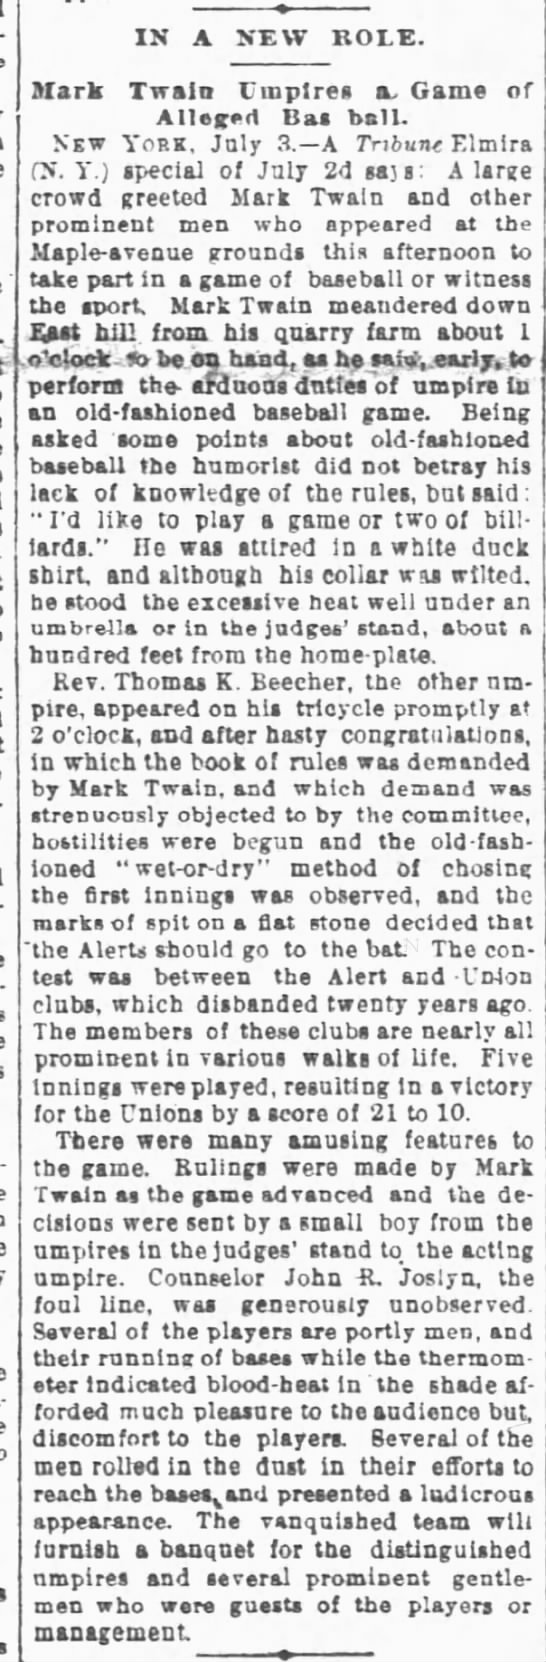 Newspaper account of Mark Twain umpiring a baseball game in New York in 1887 - 